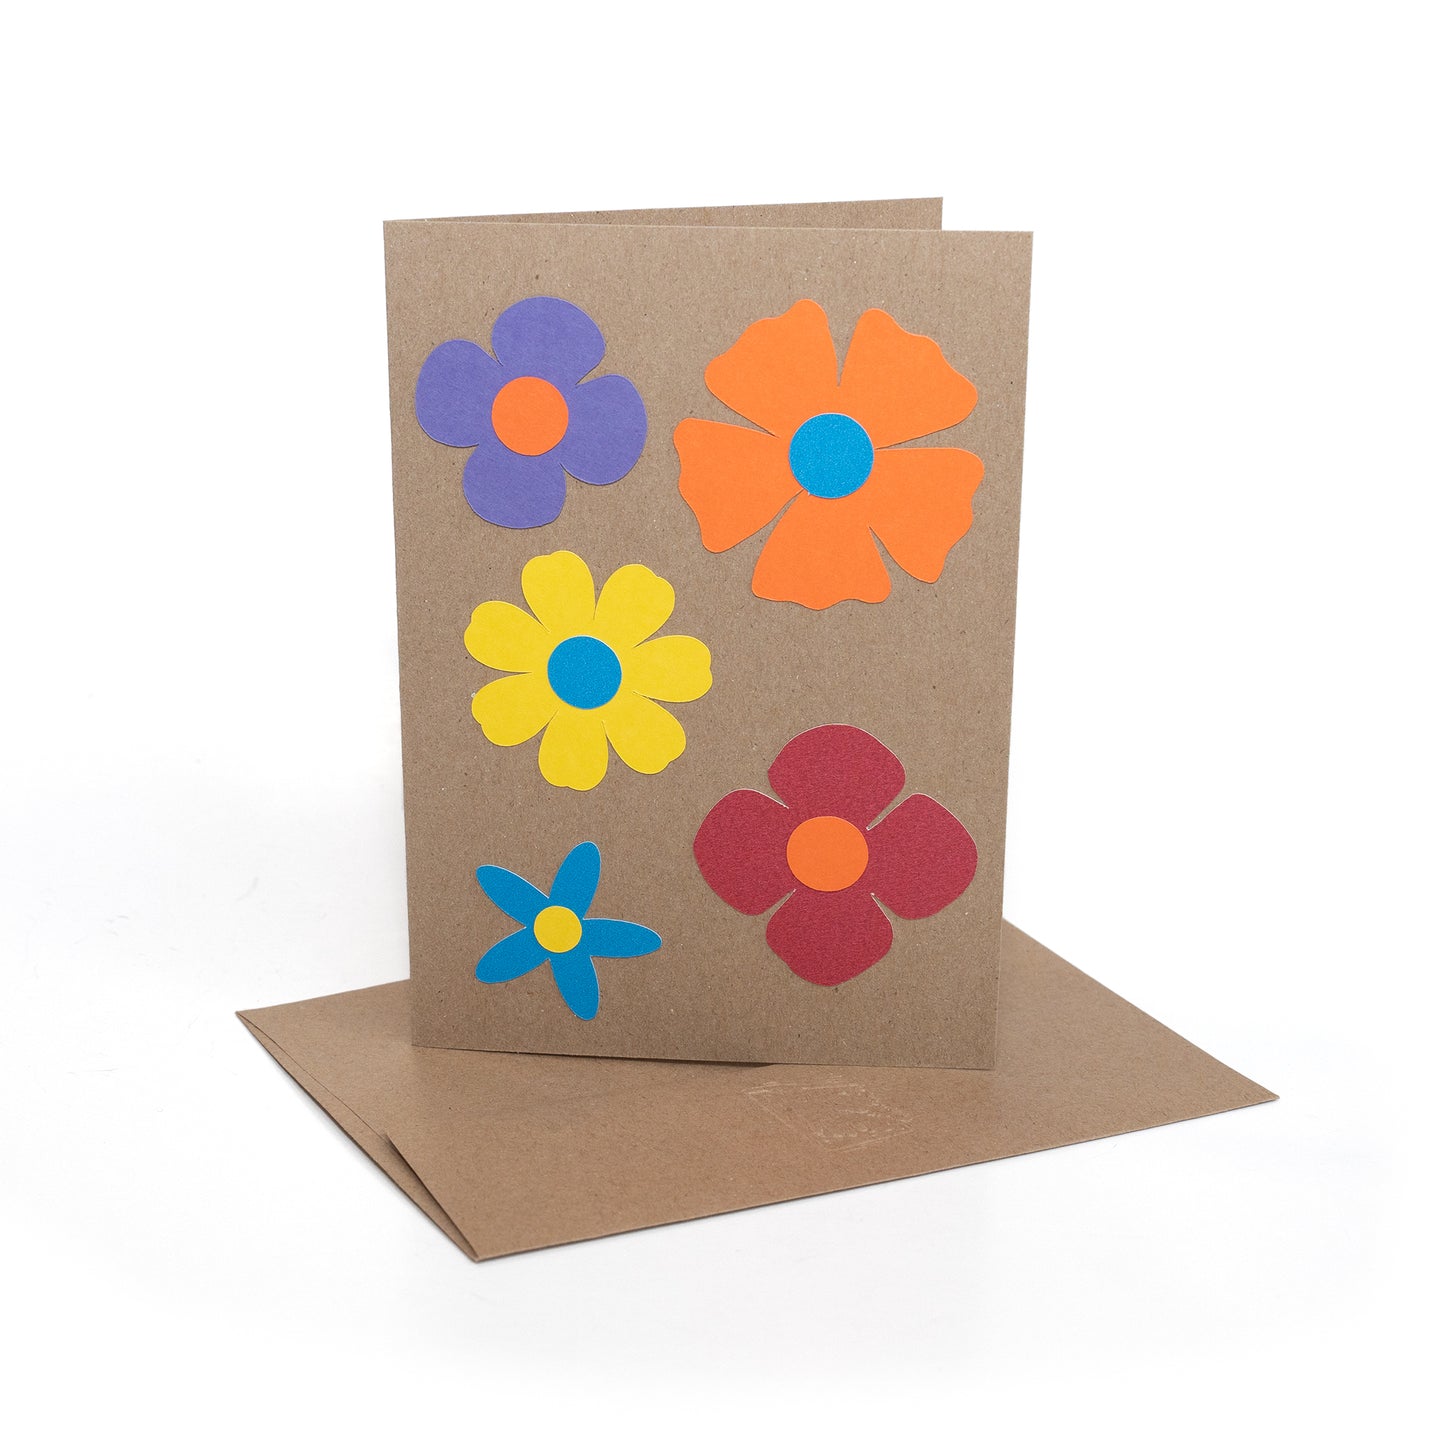 Flowers cut paper card